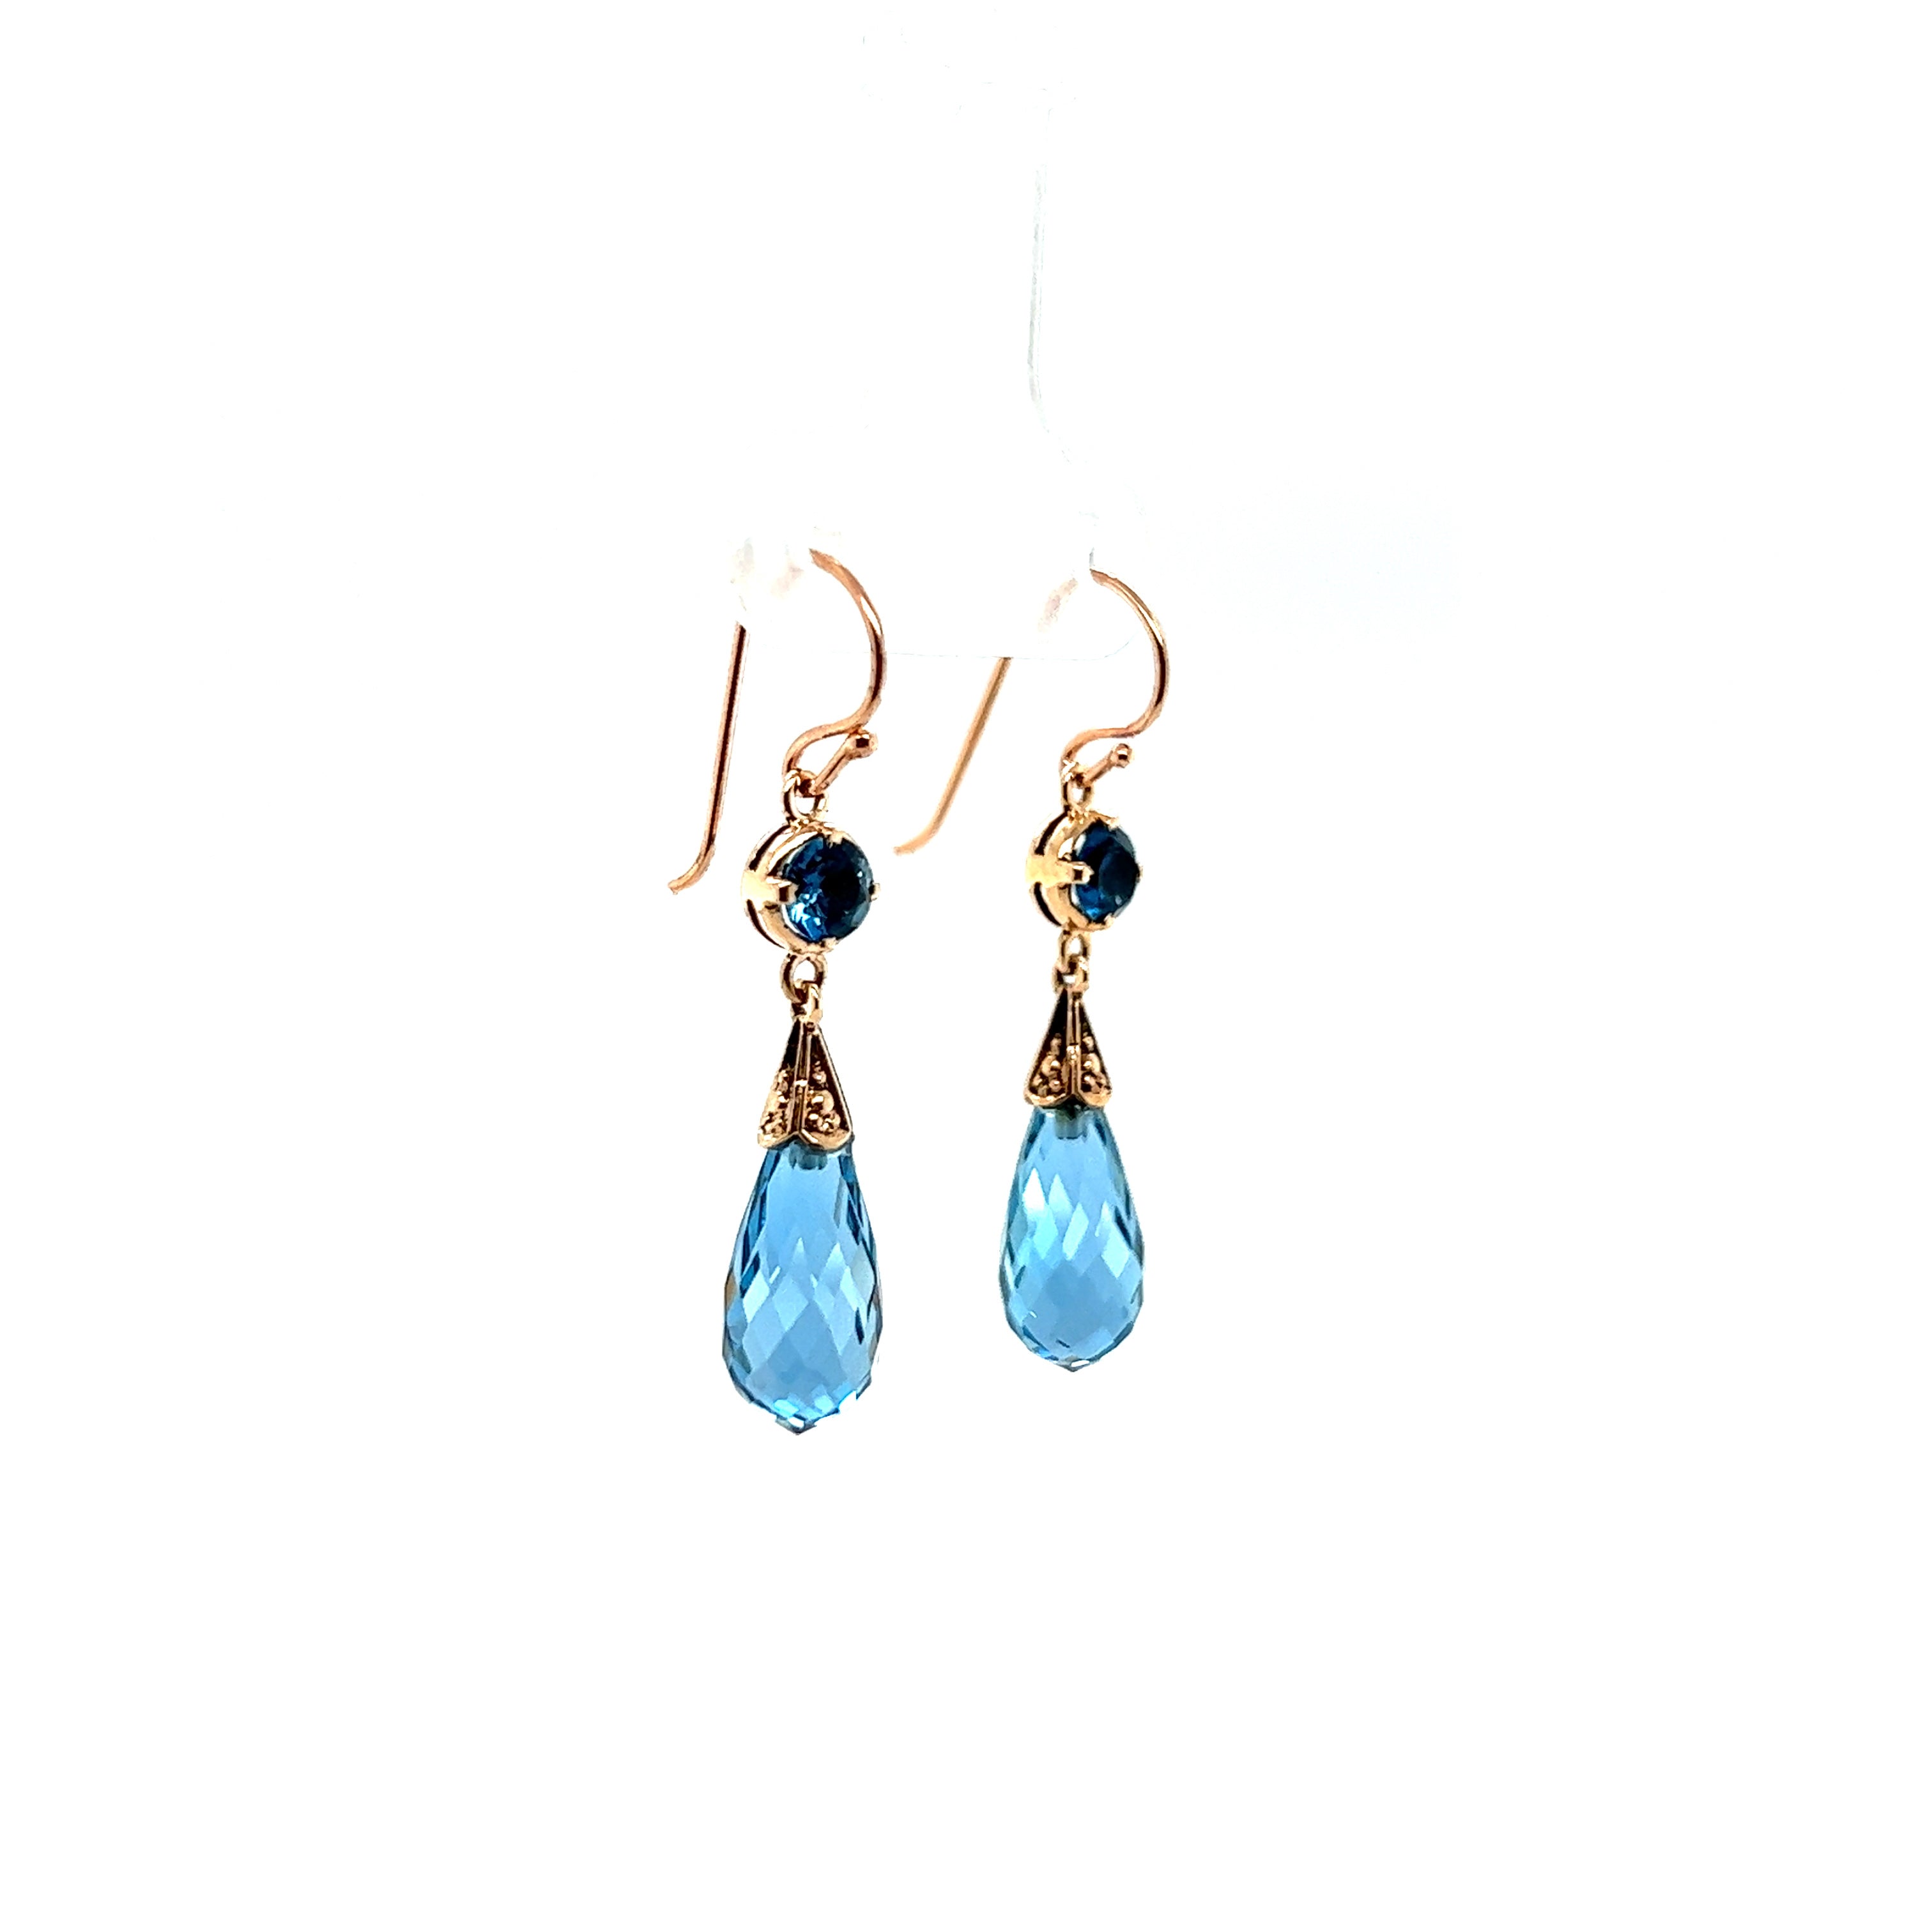 9ct rose gold briollette London blue topaz earrings.